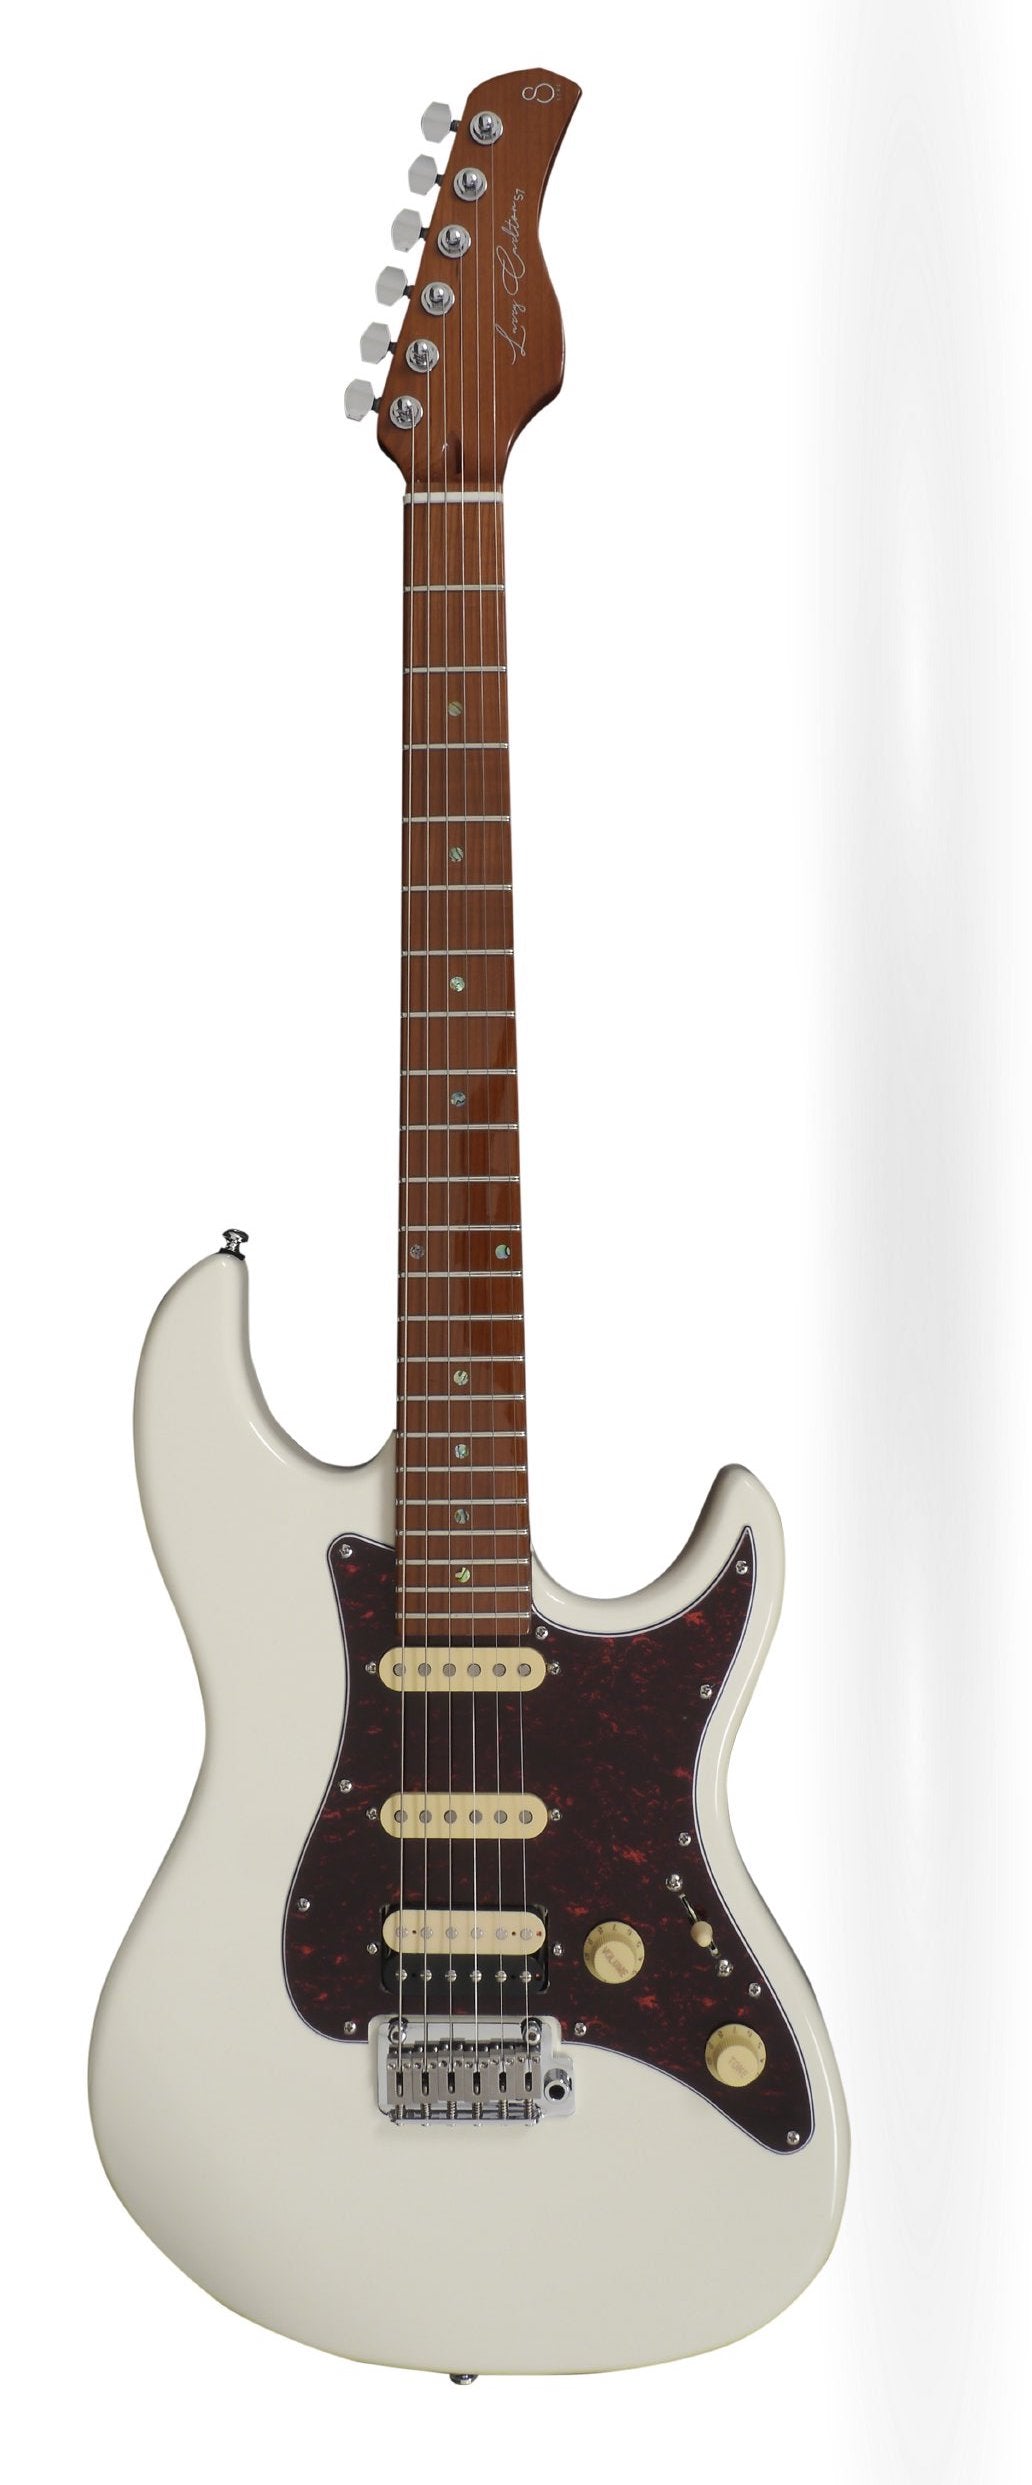 Sire Larry Carlton S7 Sire Electric Guitar - Antique White